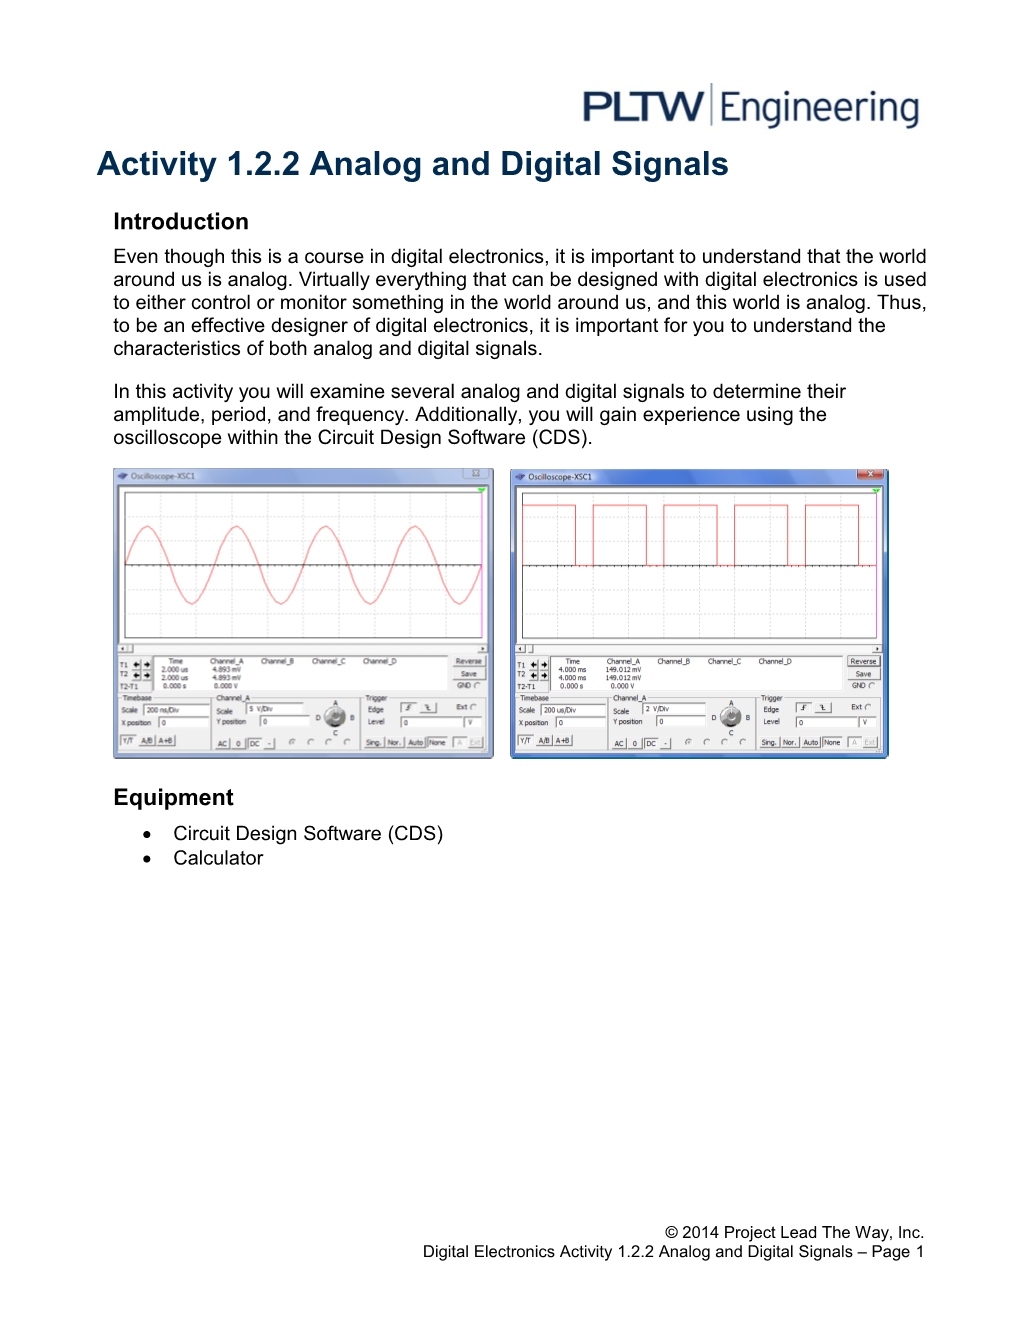 1.2.2.A Analog and Digital Signals